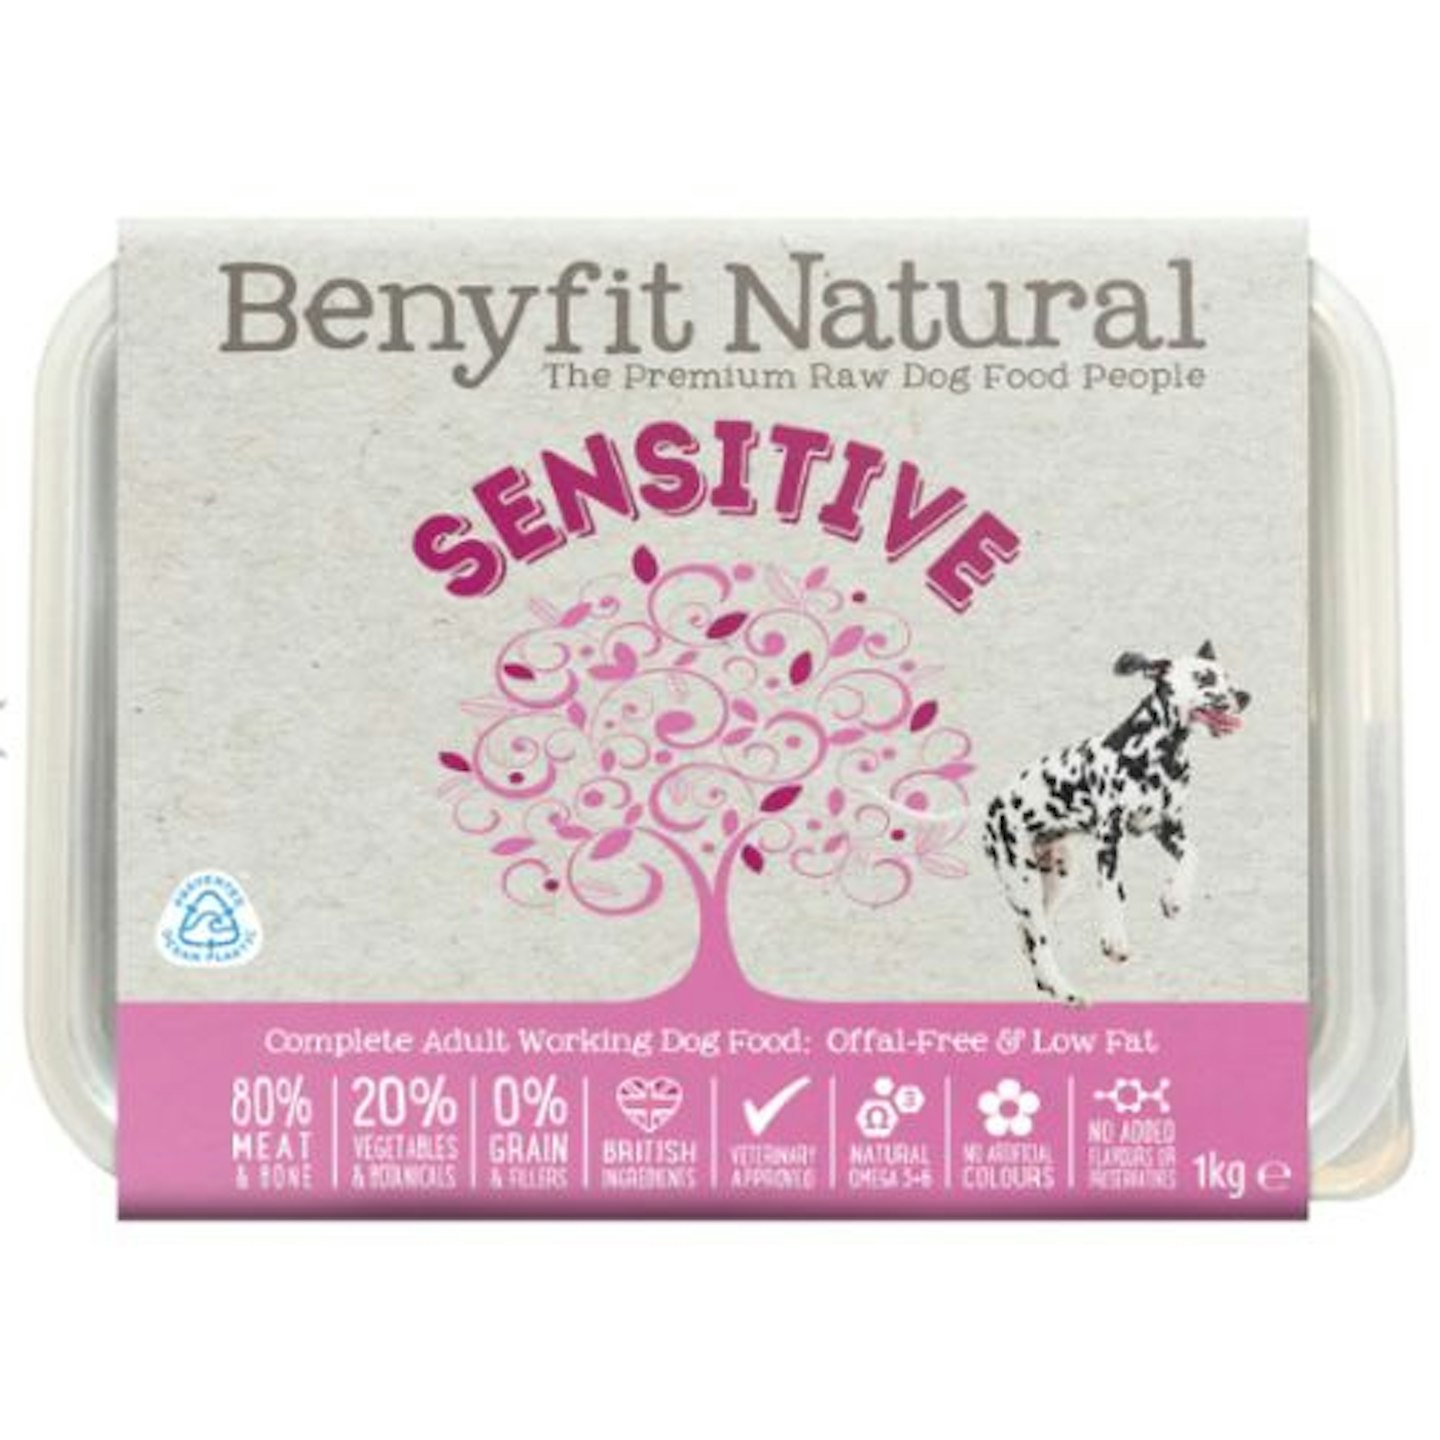 Benyfit Natural Sensitive Complete Adult Raw Dog Food